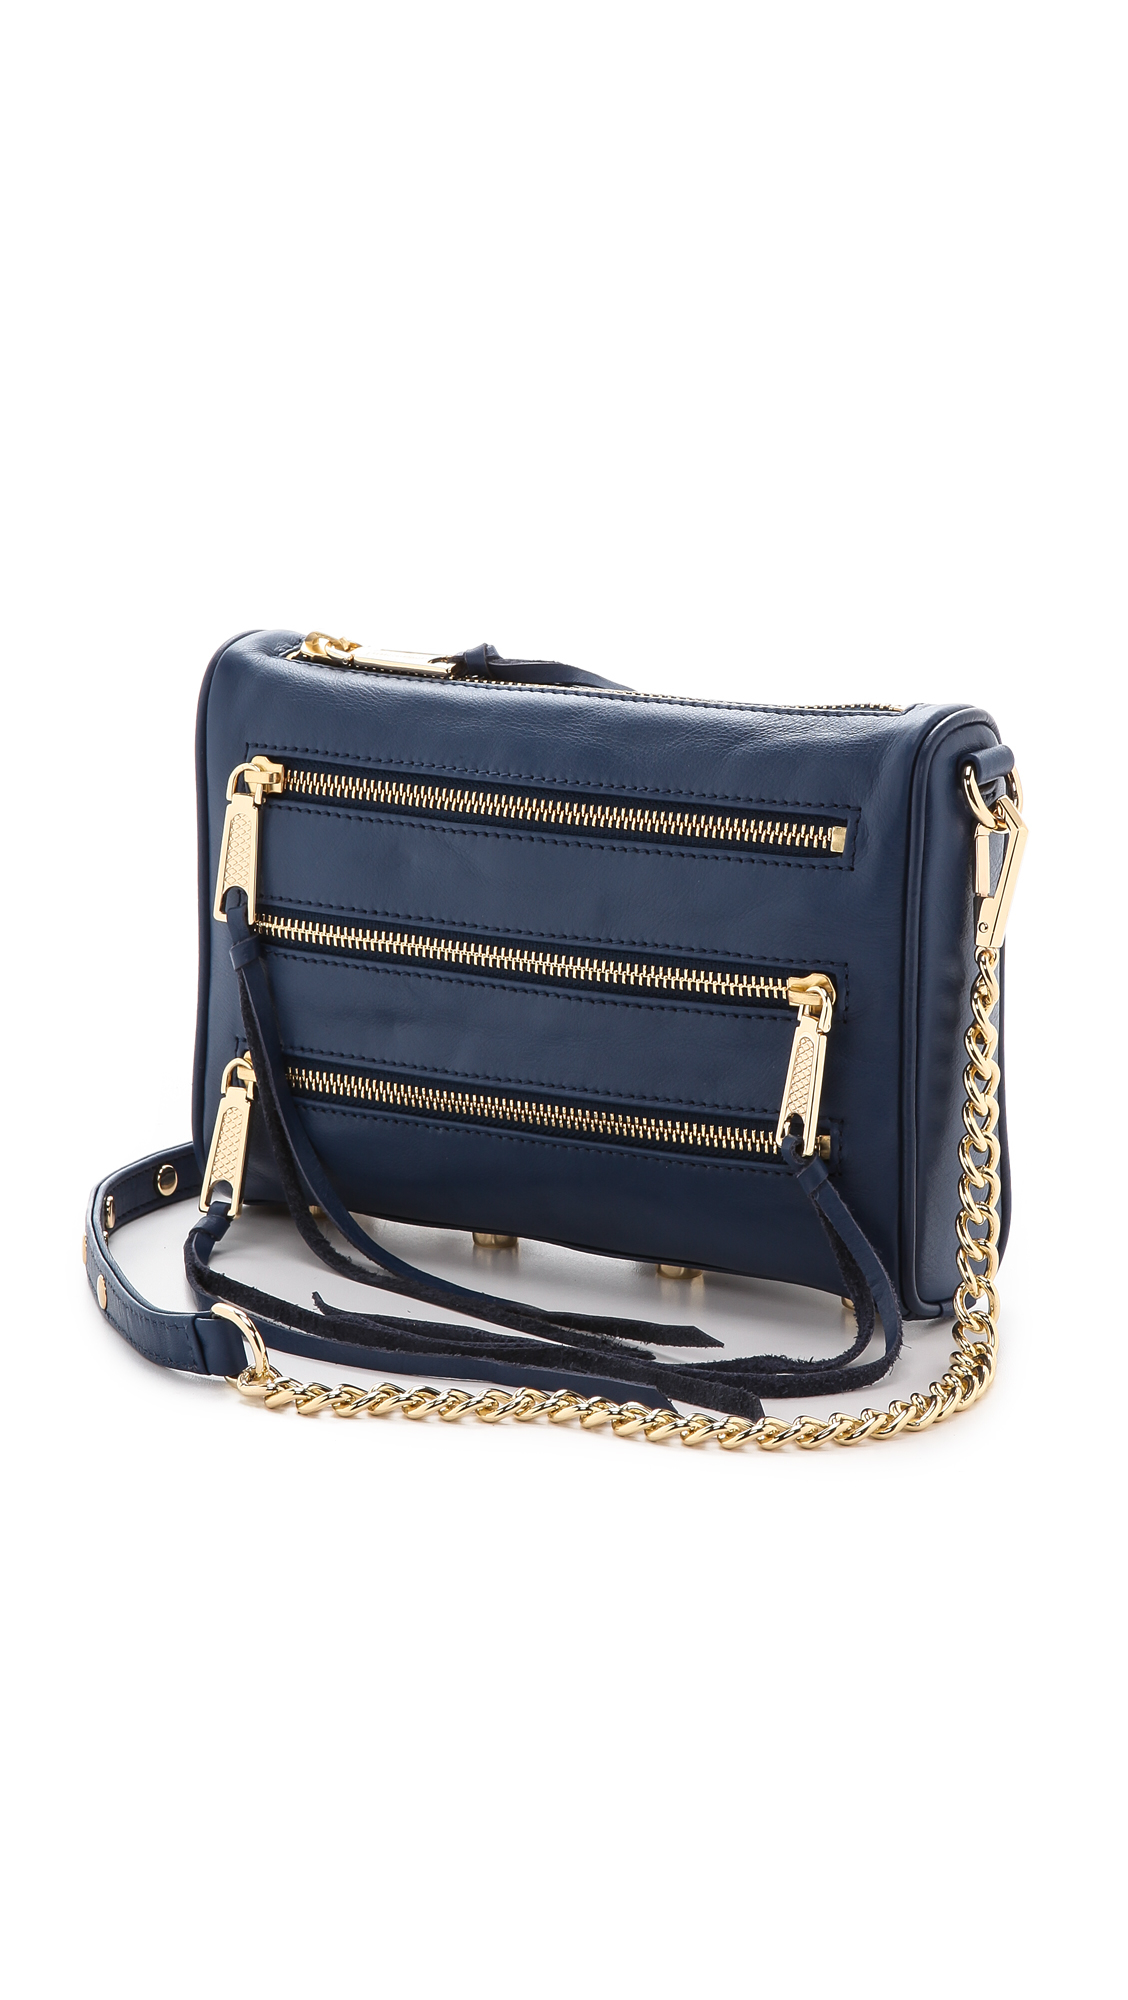 Rebecca Minkoff Mini 5 Zip Bag - Black in Blue - Lyst